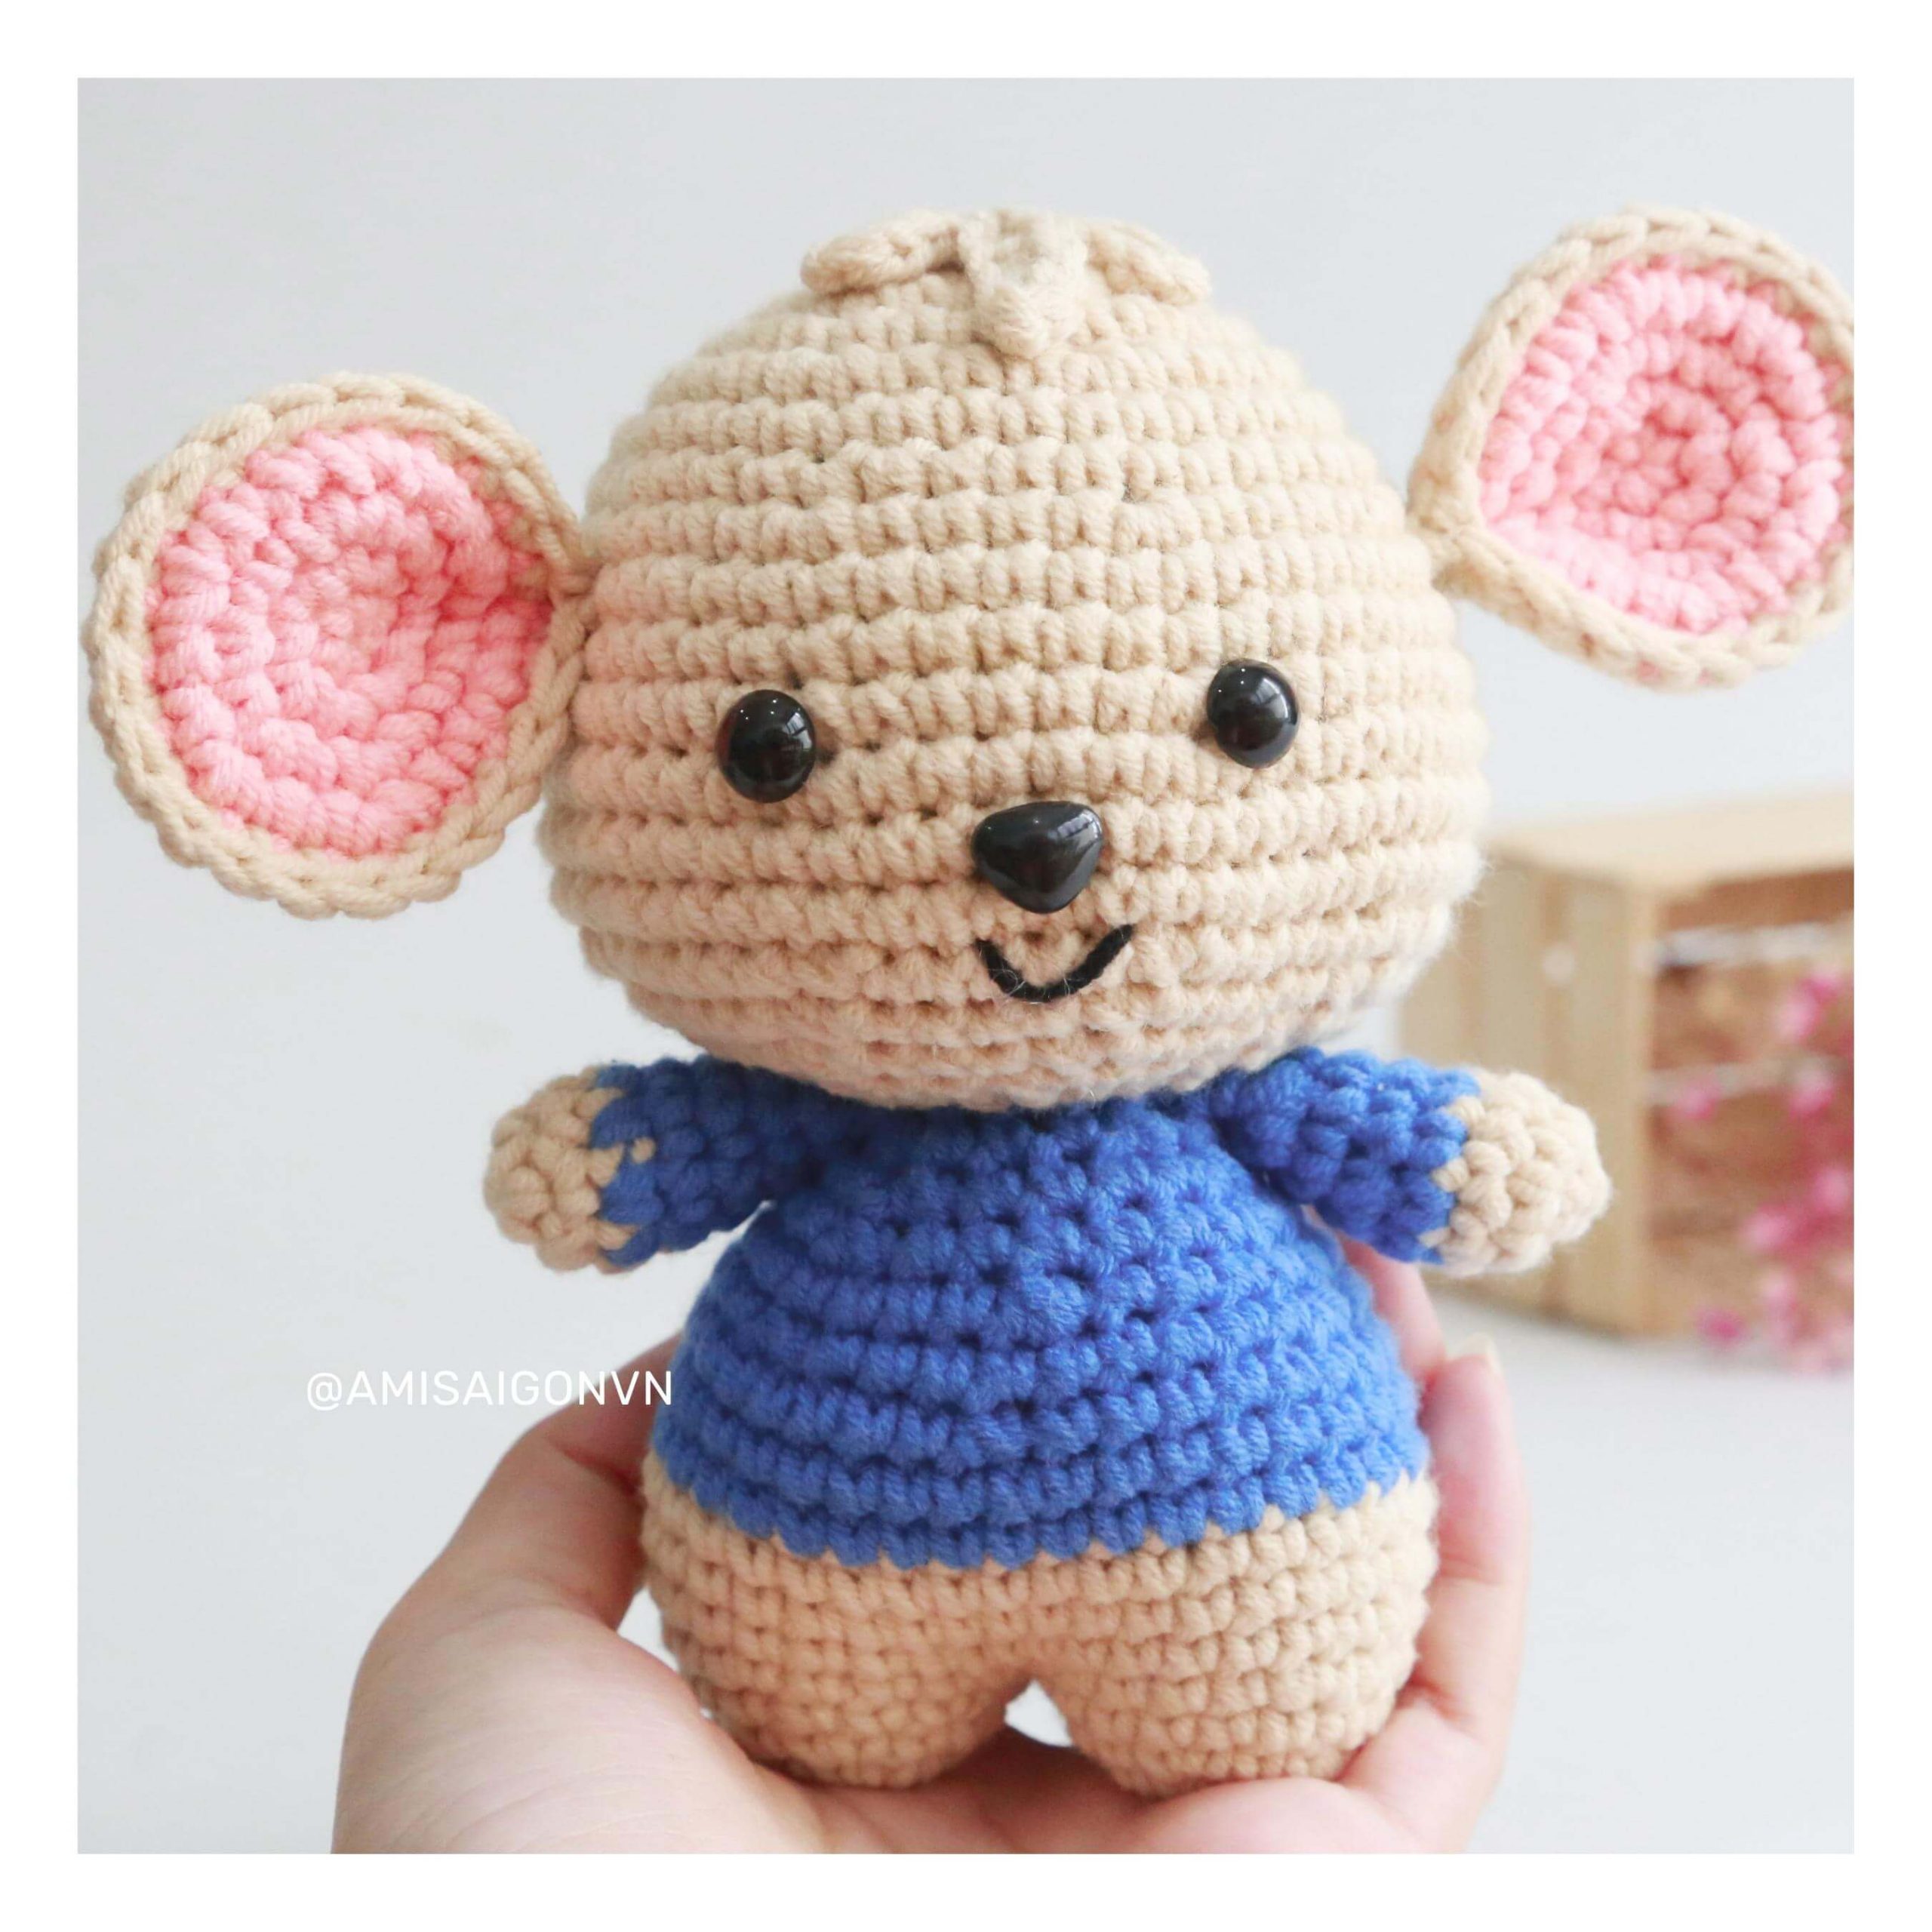 roo-amigurumi-crochet-pattern-amisaigon (3)